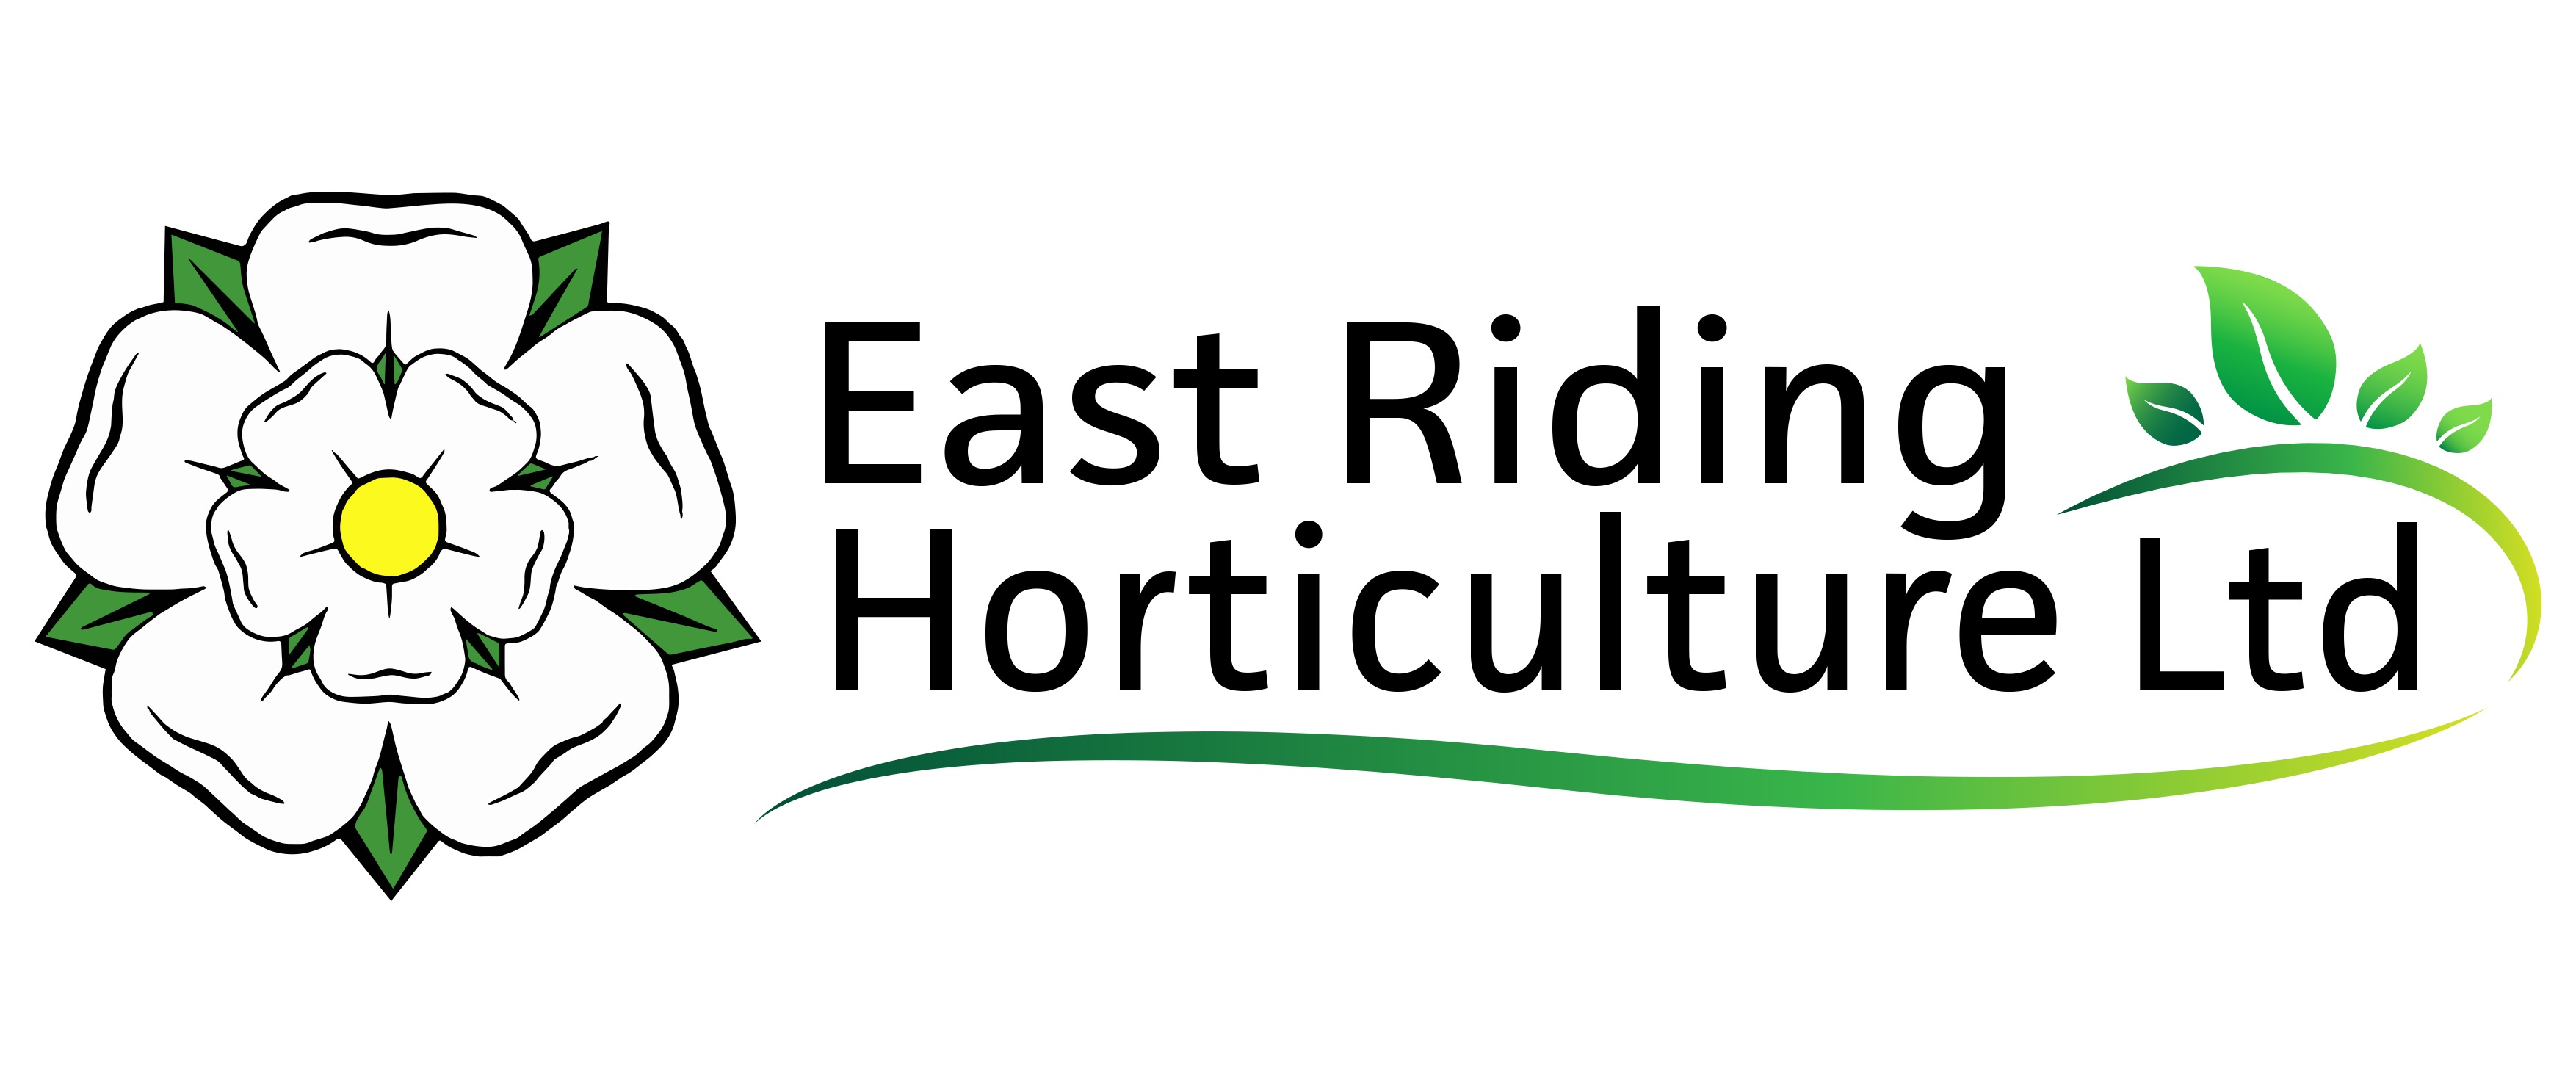 EAST RIDING HORTICULTURE LTD